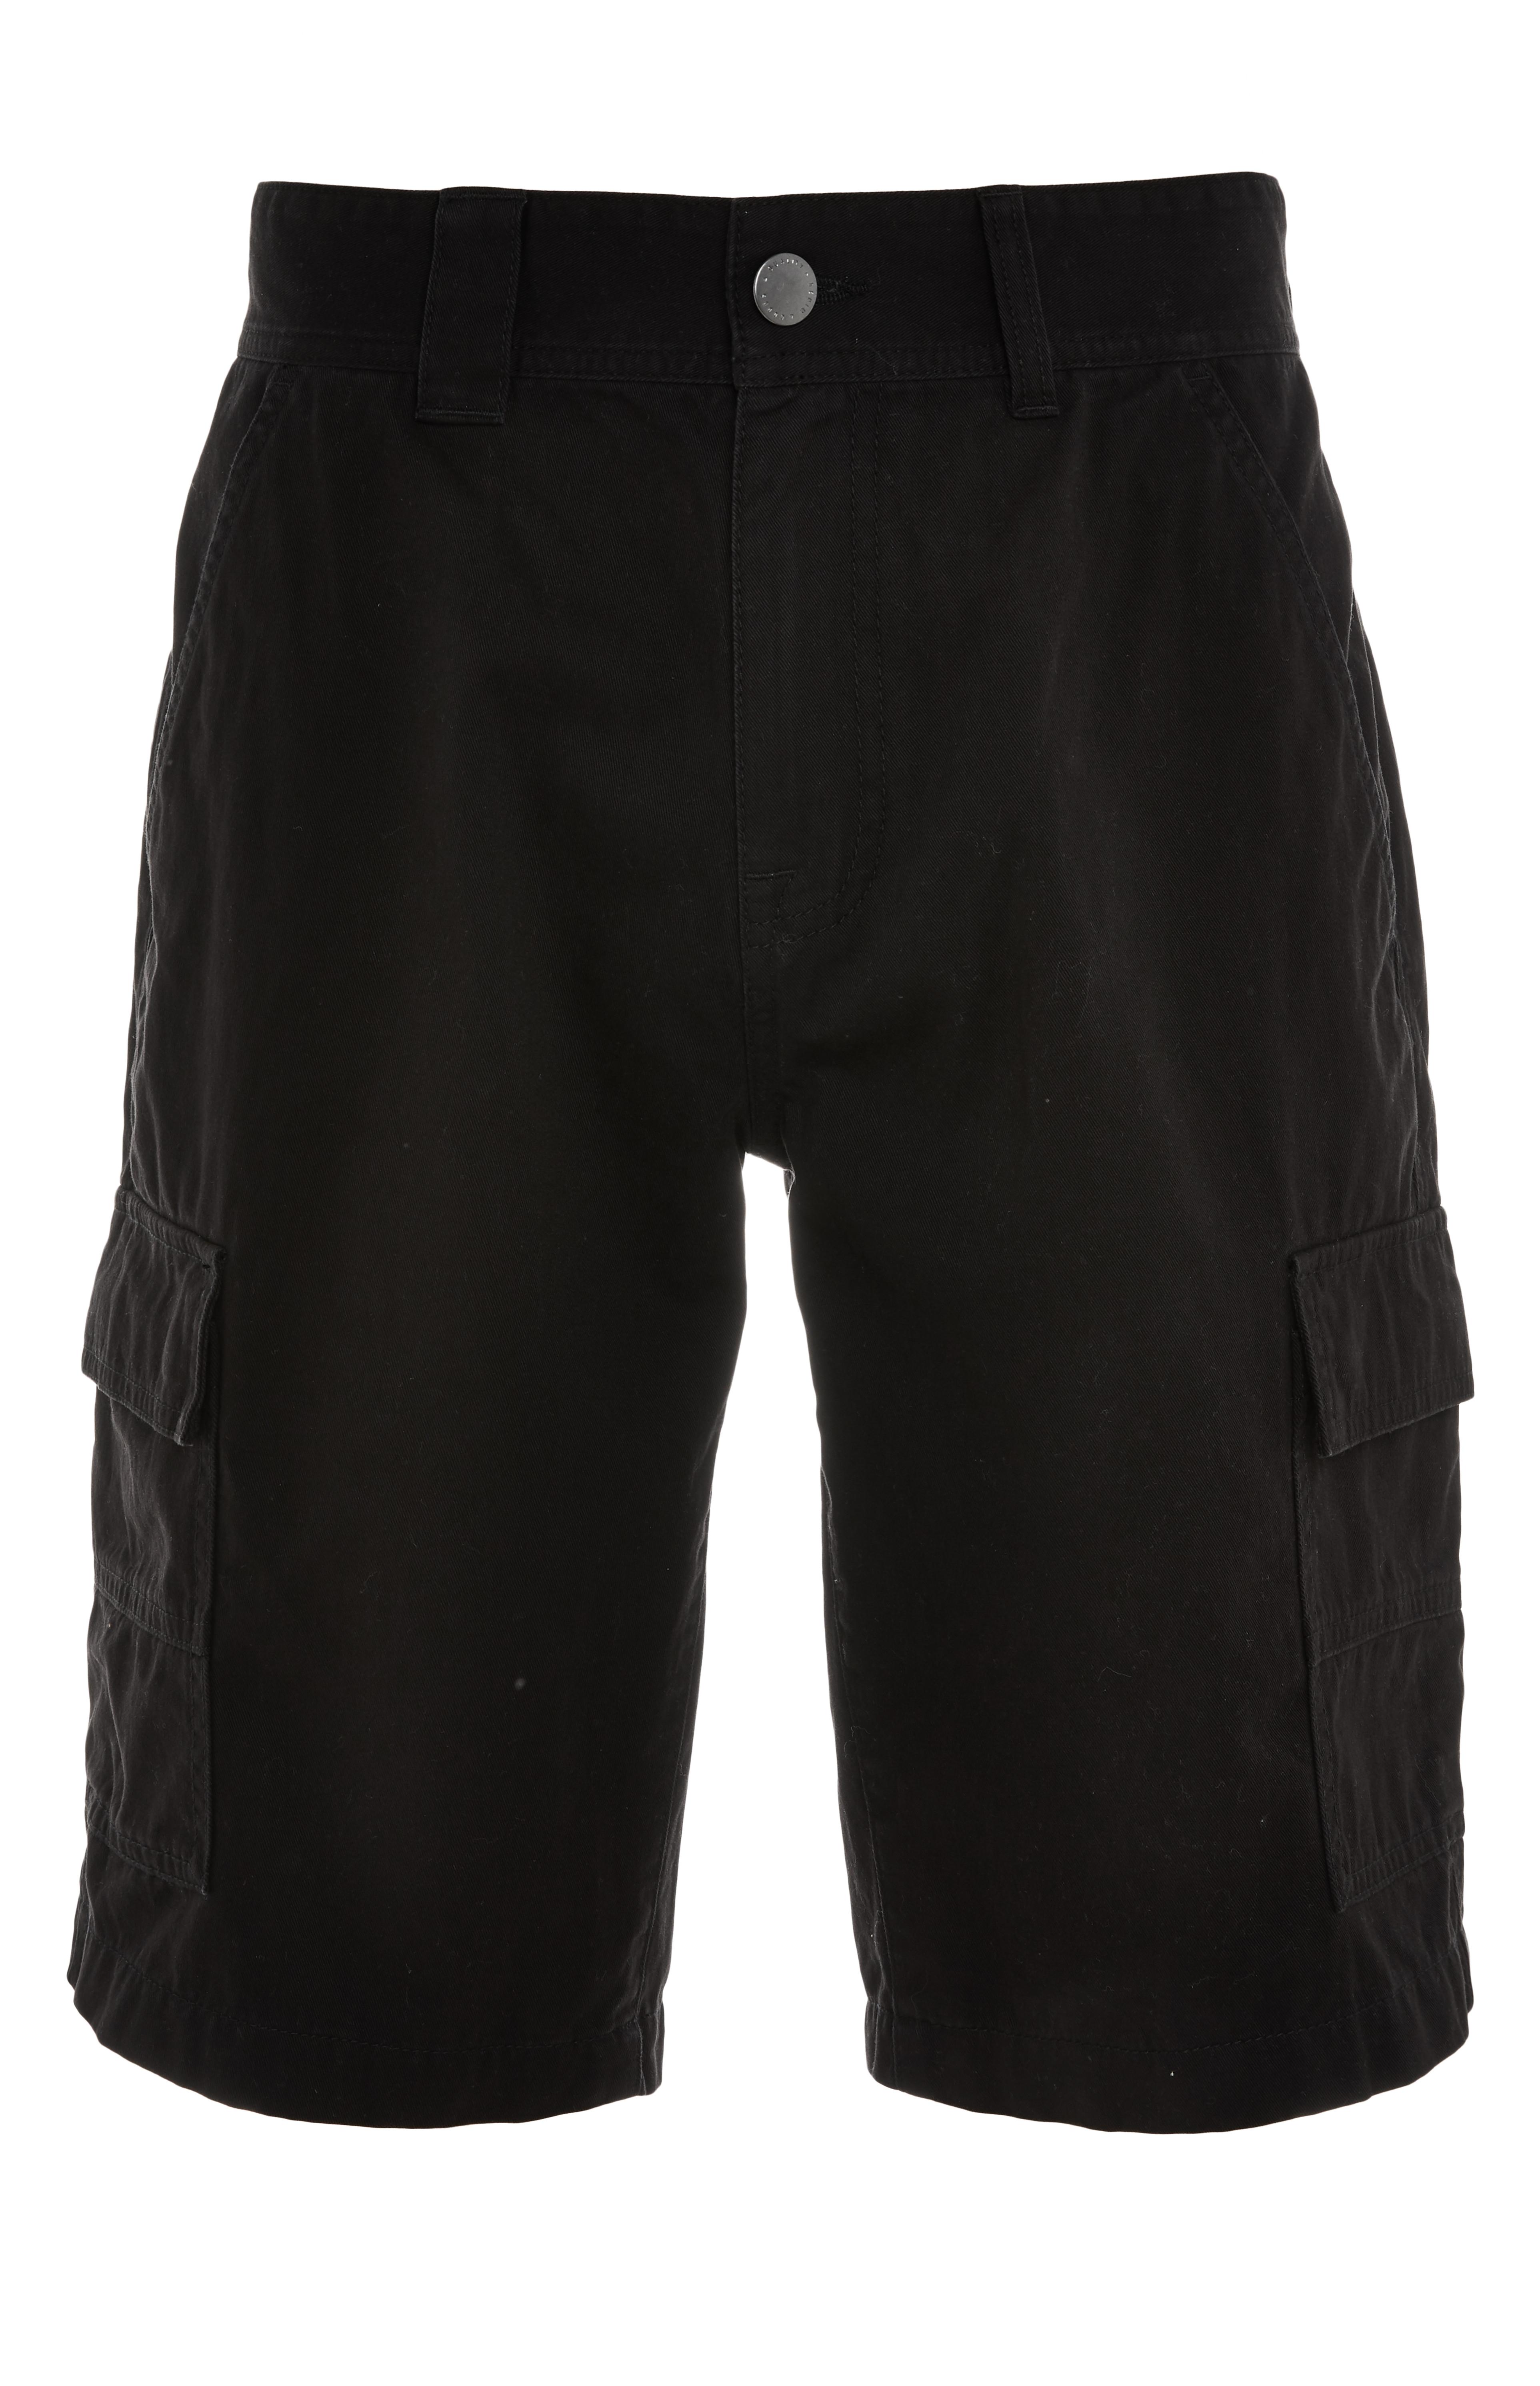 Black Cargo Pocket Shorts | Men's Shorts | Men's Clothing | Our Men's ...